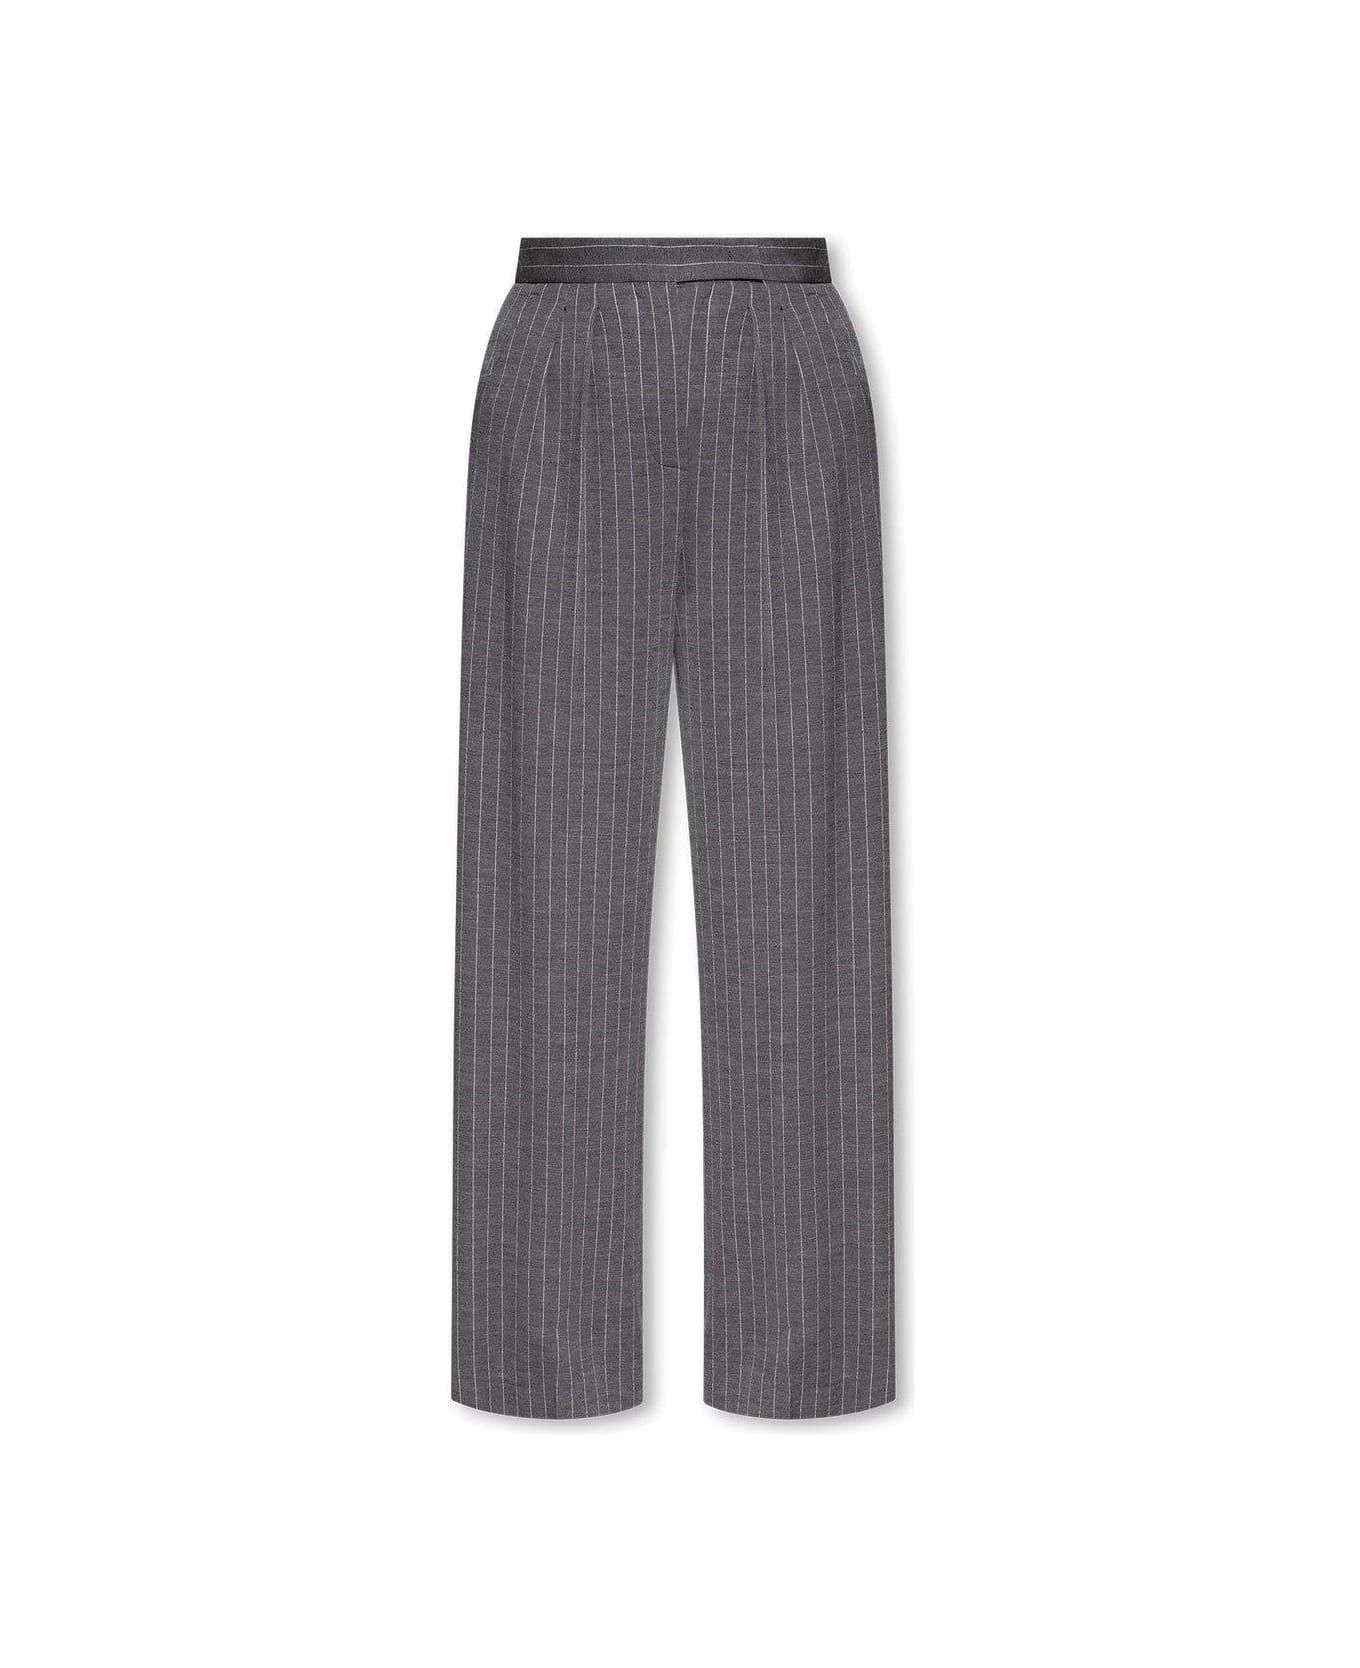 Max Mara Pinstriped Trousers - Medium grey ボトムス